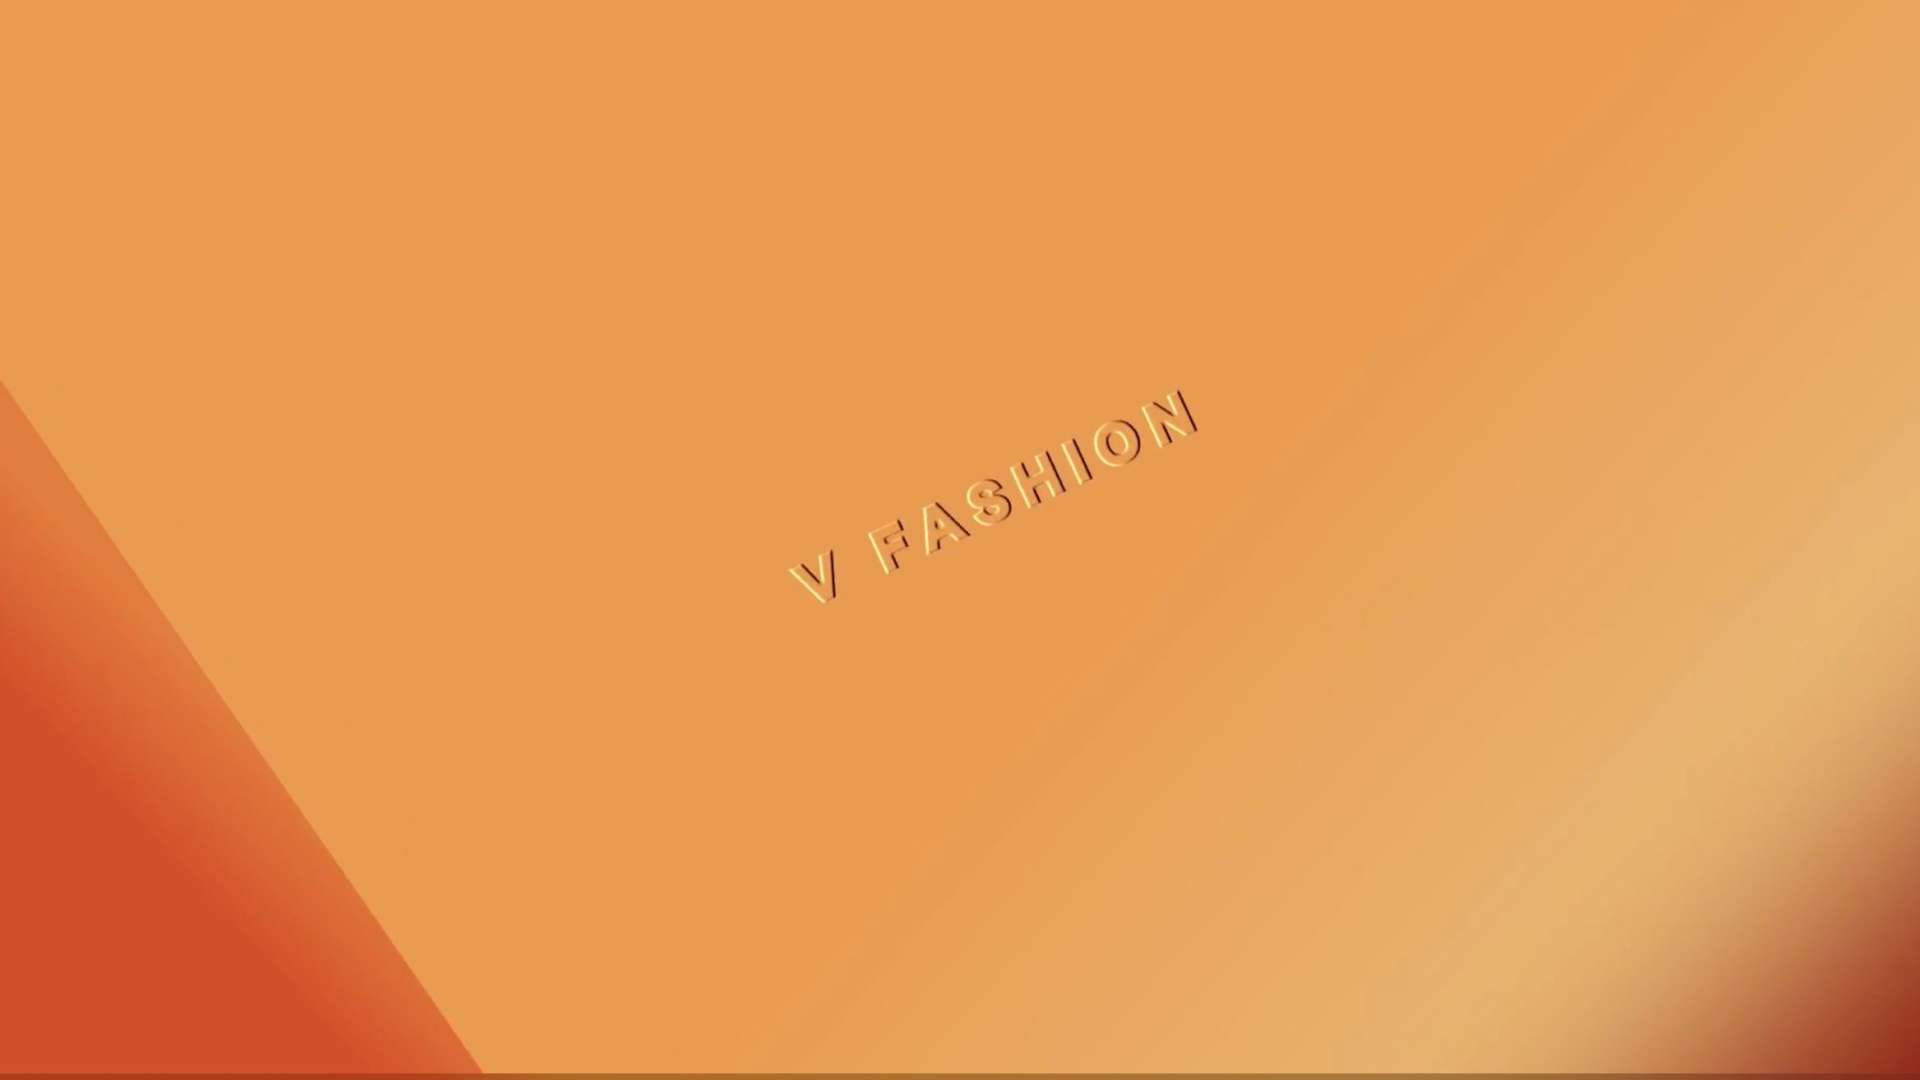 《V FASHION》&演员王锵 品牌TVC